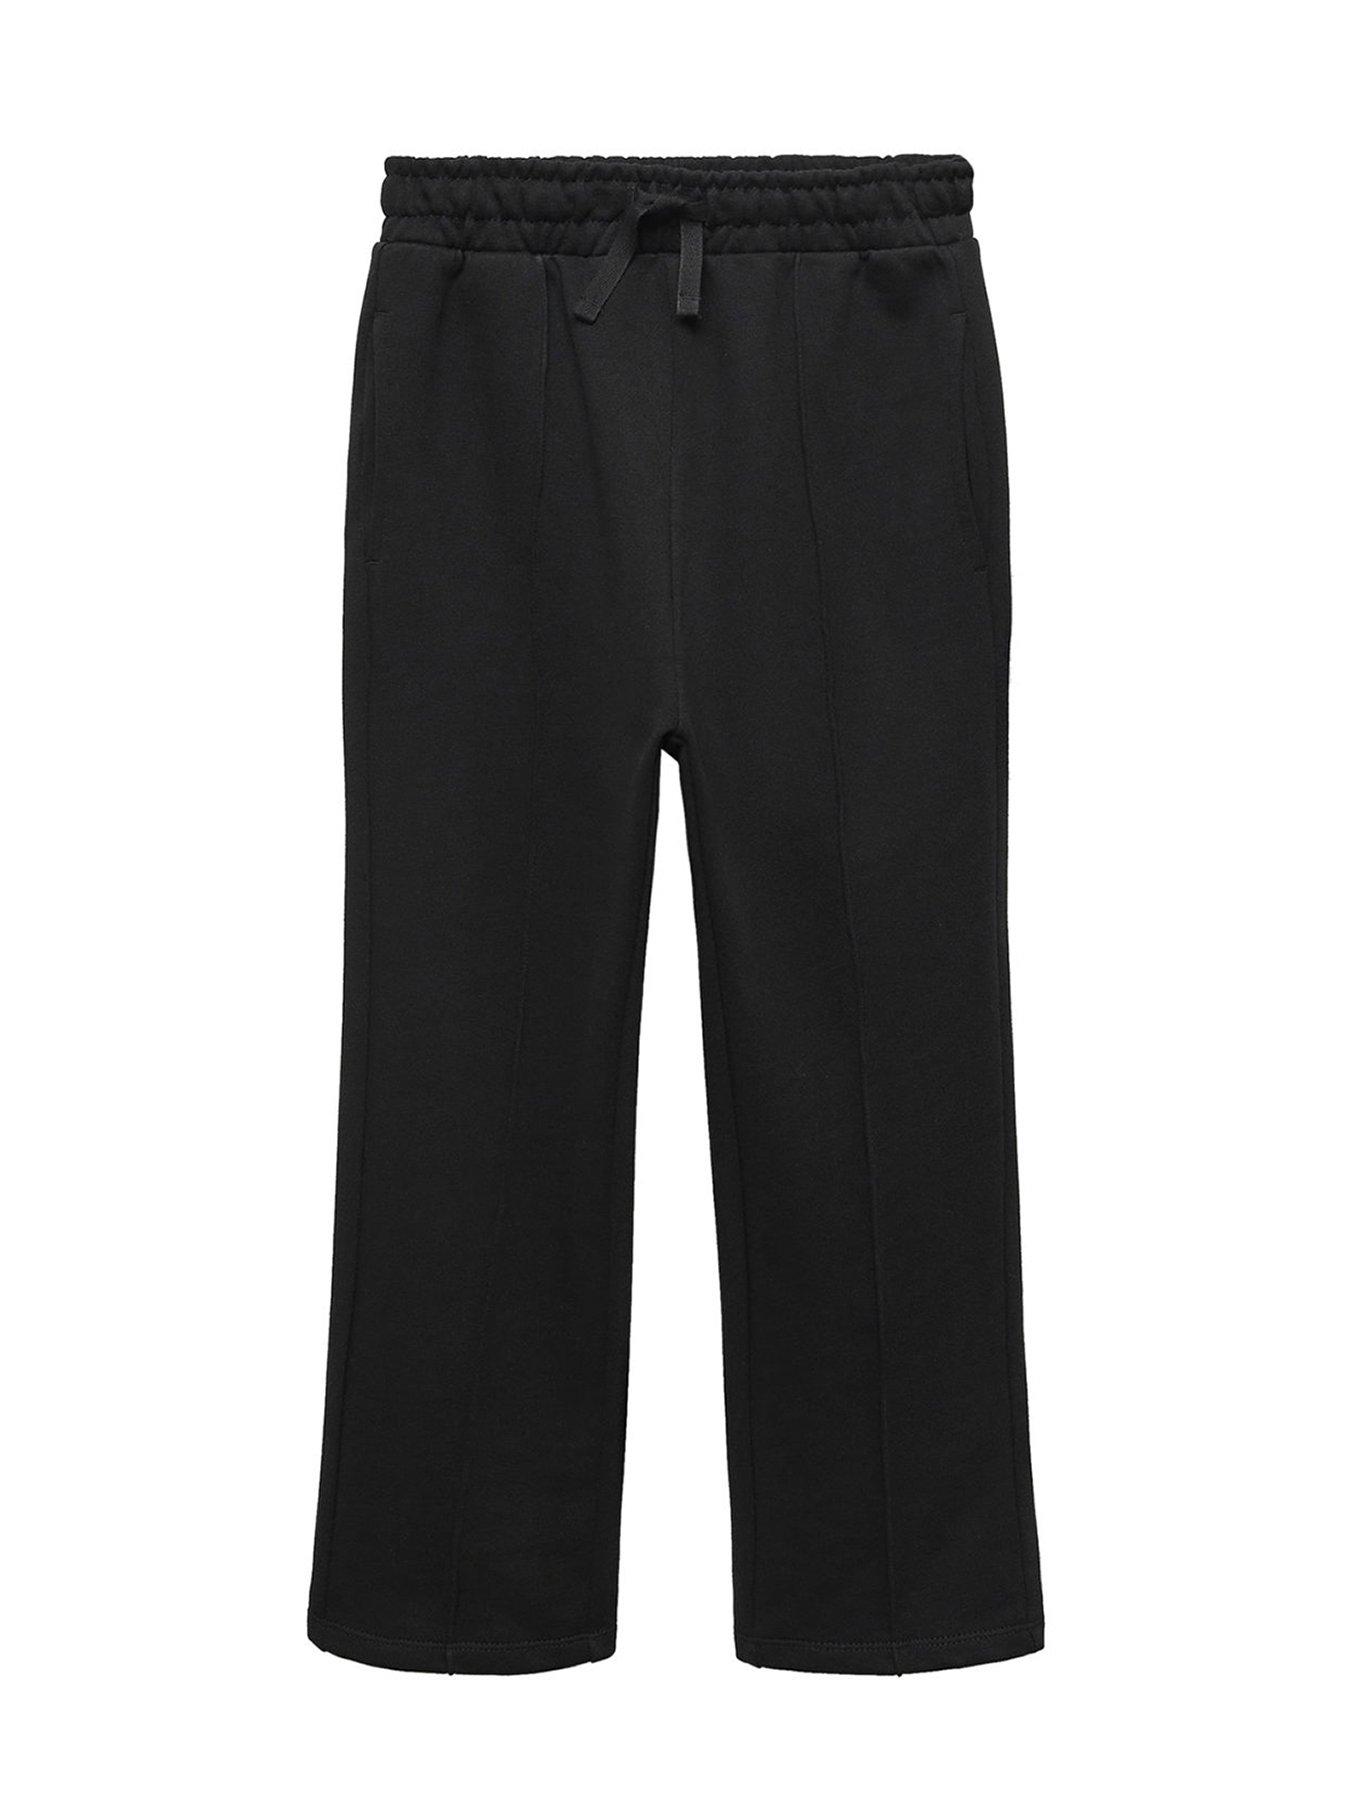 Calvin Klein Women's Seam-Detail Stretch Pants Black Black • Price »